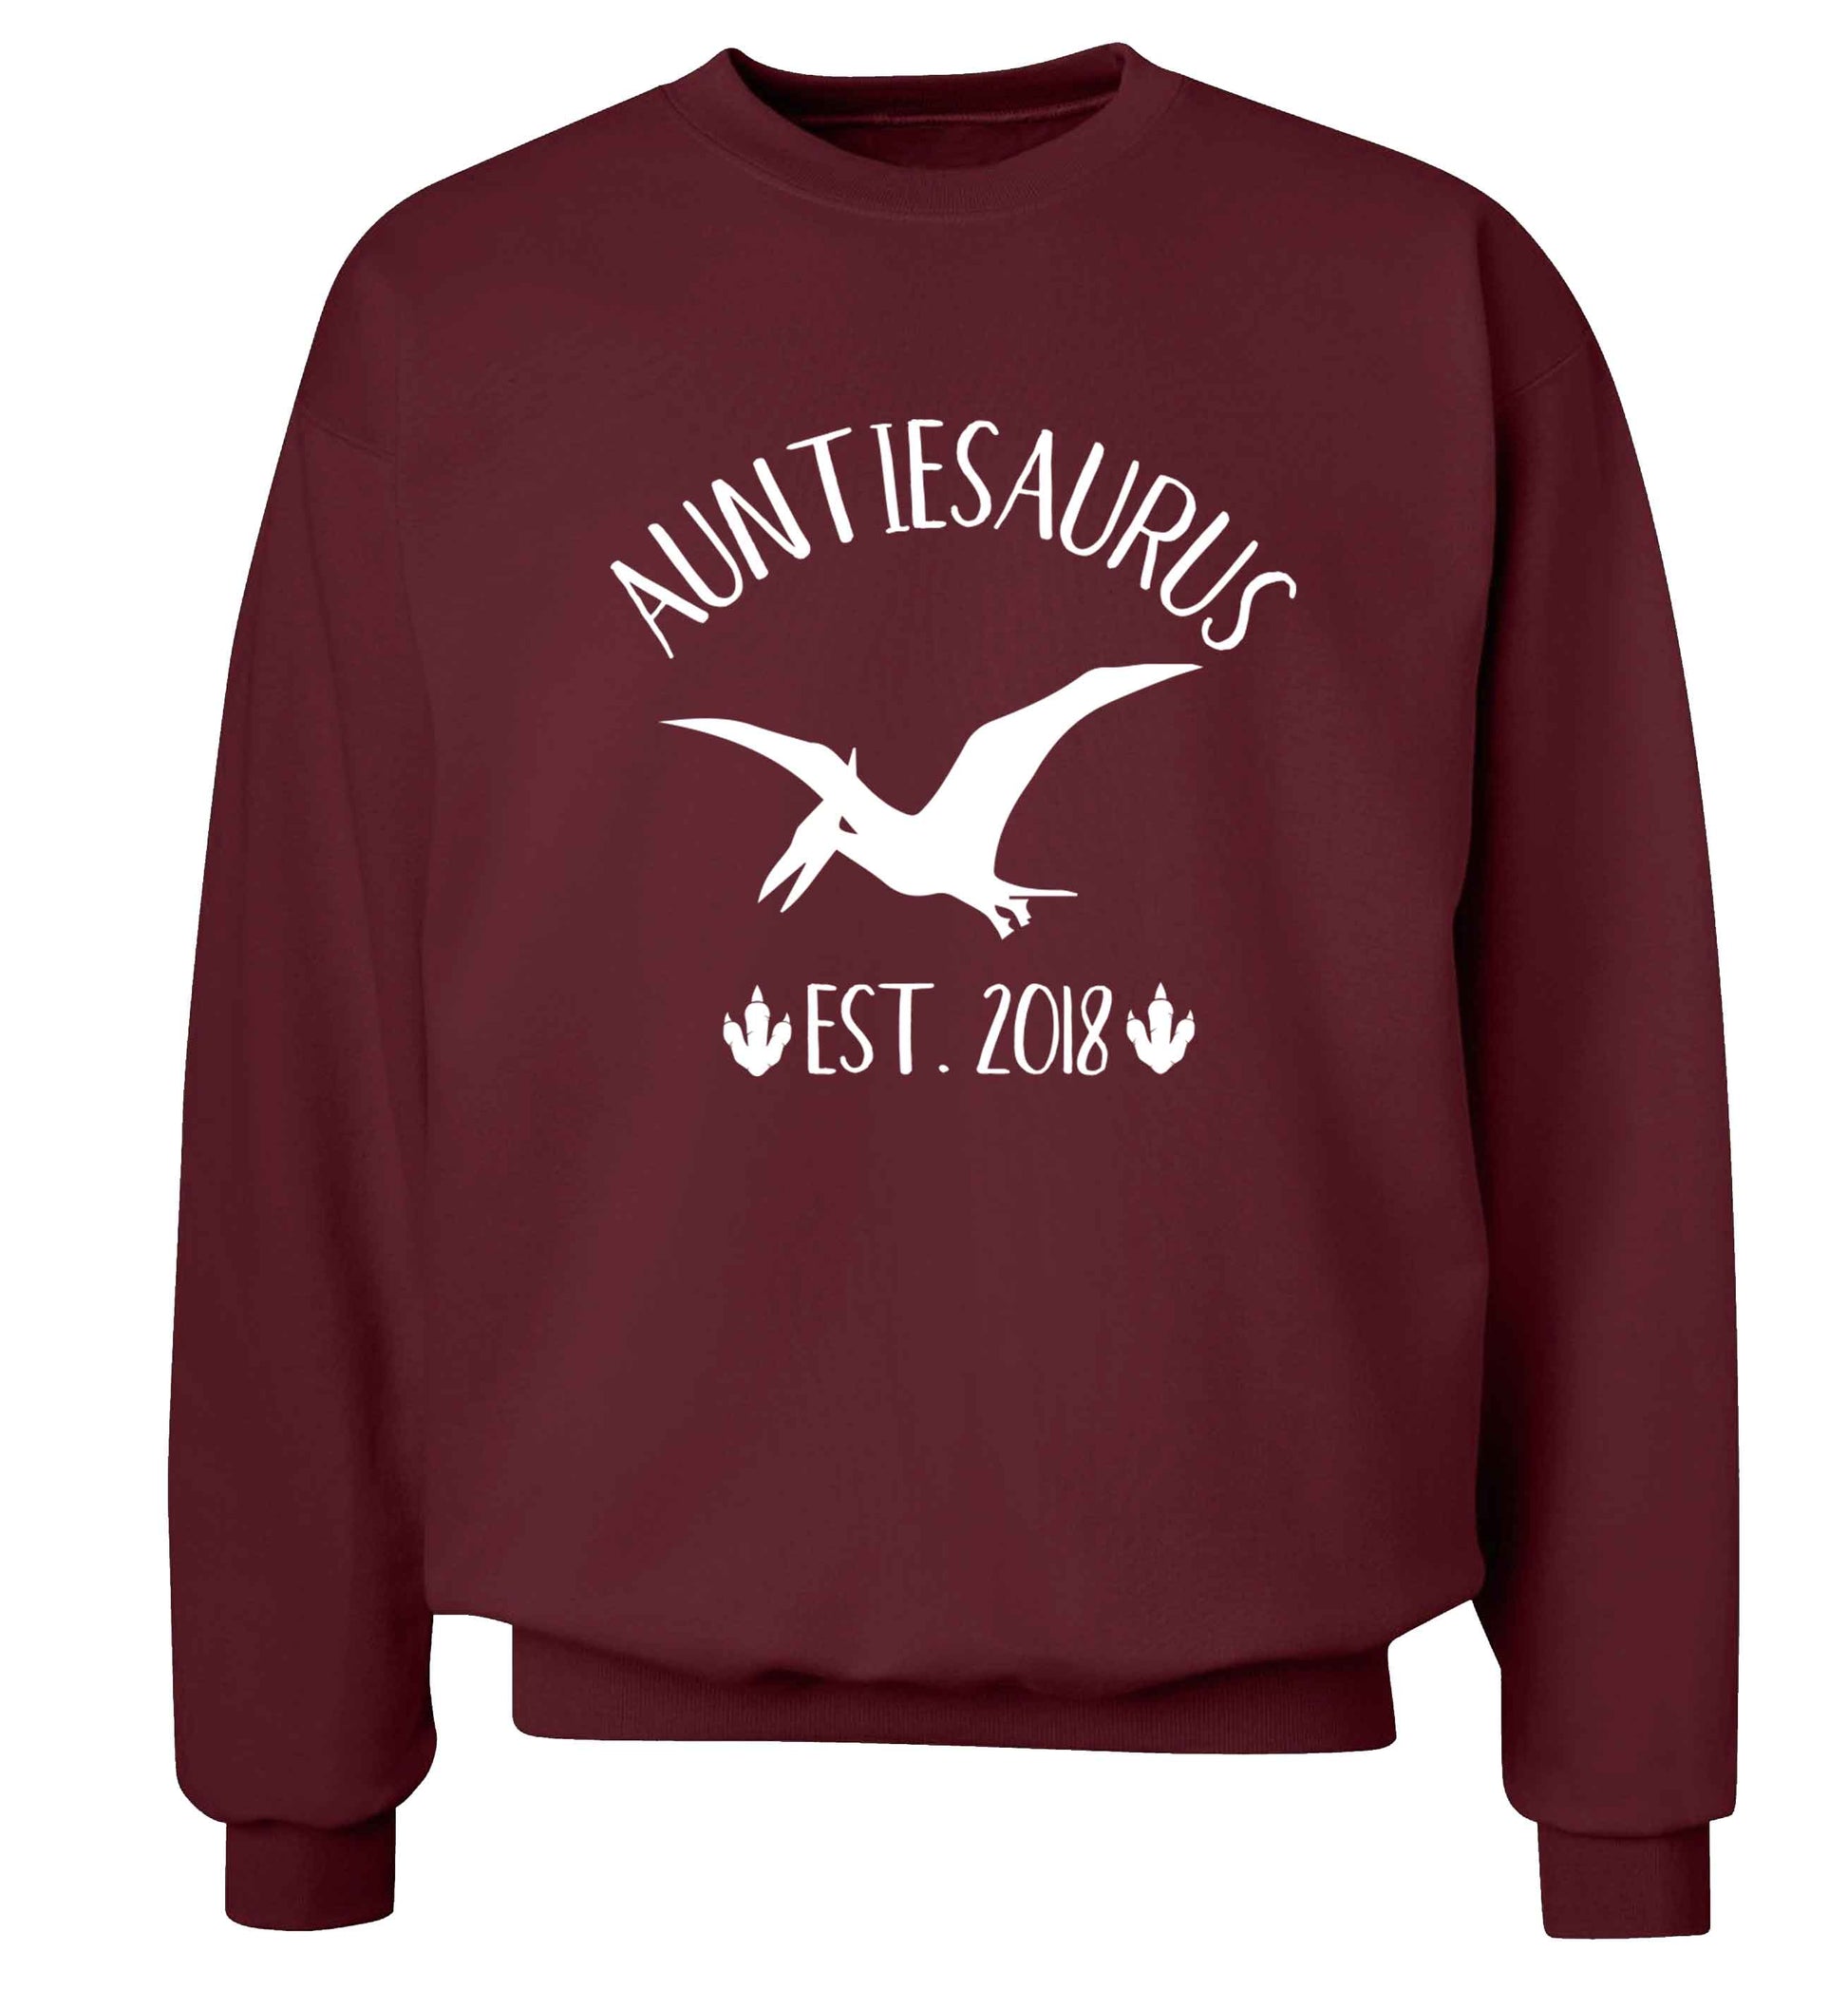 Personalised auntiesaurus since (custom date) Adult's unisex maroon Sweater 2XL